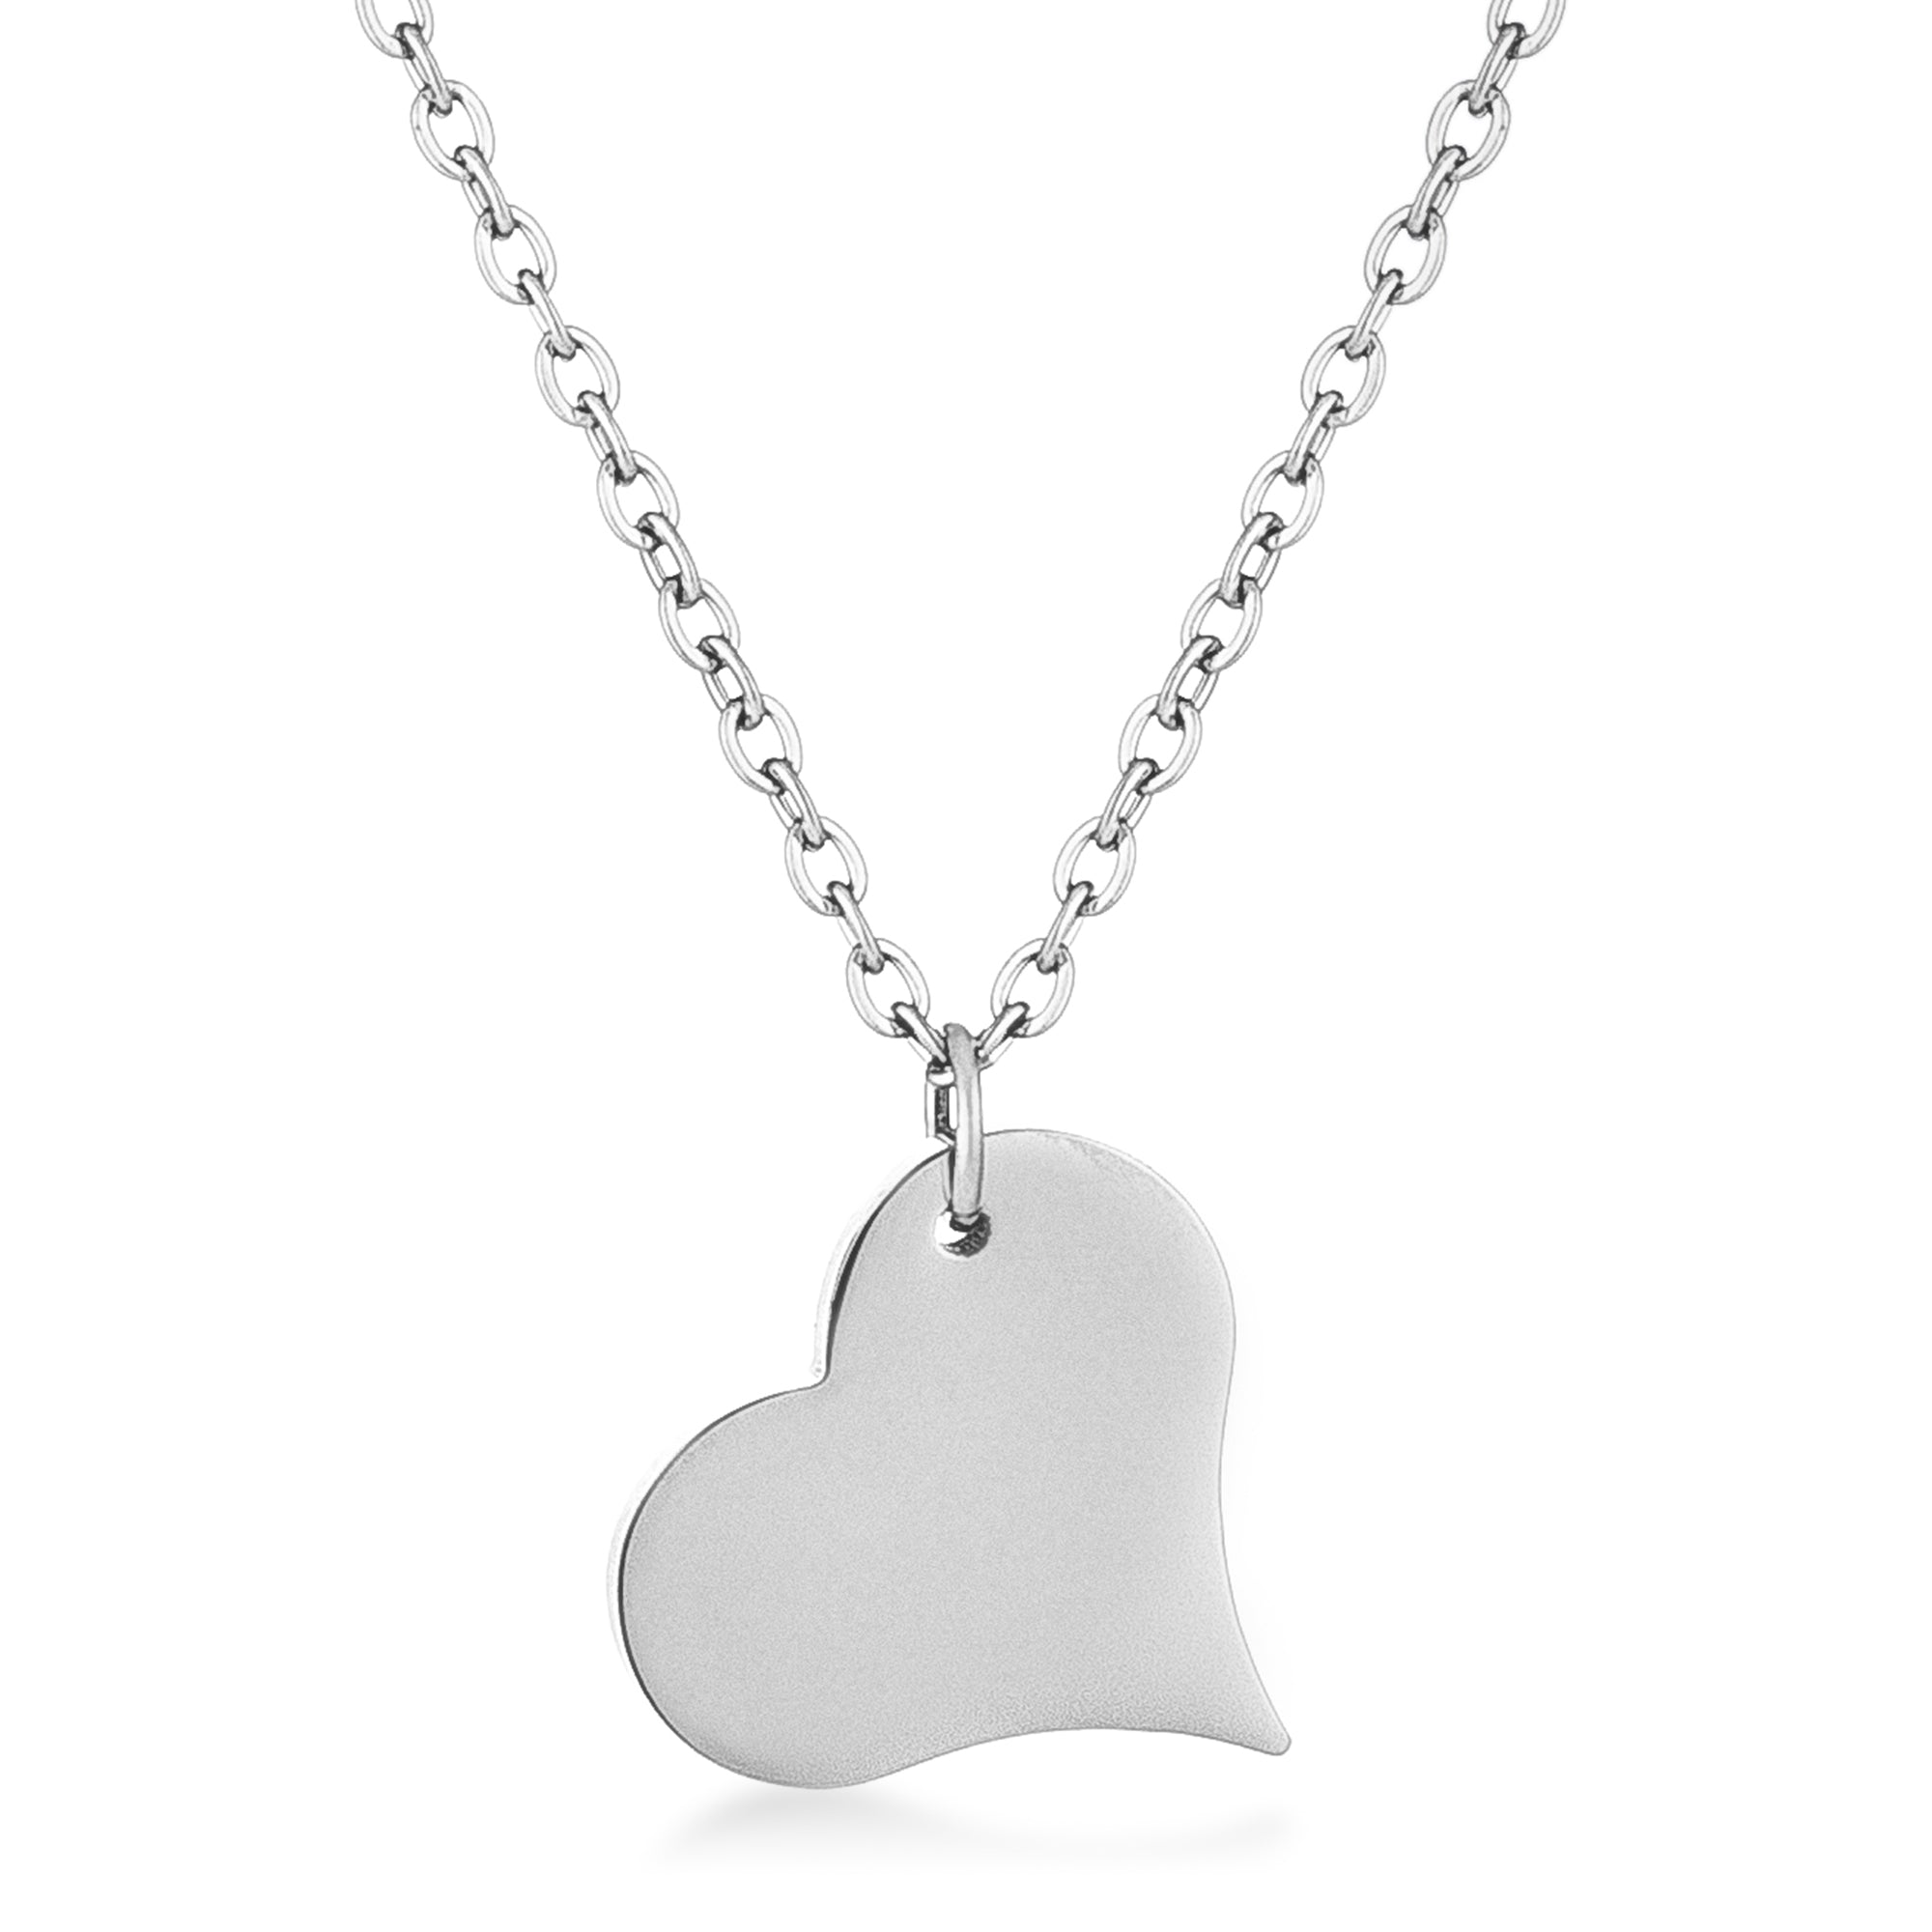 Silvertone Heart Pendant - LinkagejewelrydesignLinkagejewelrydesign